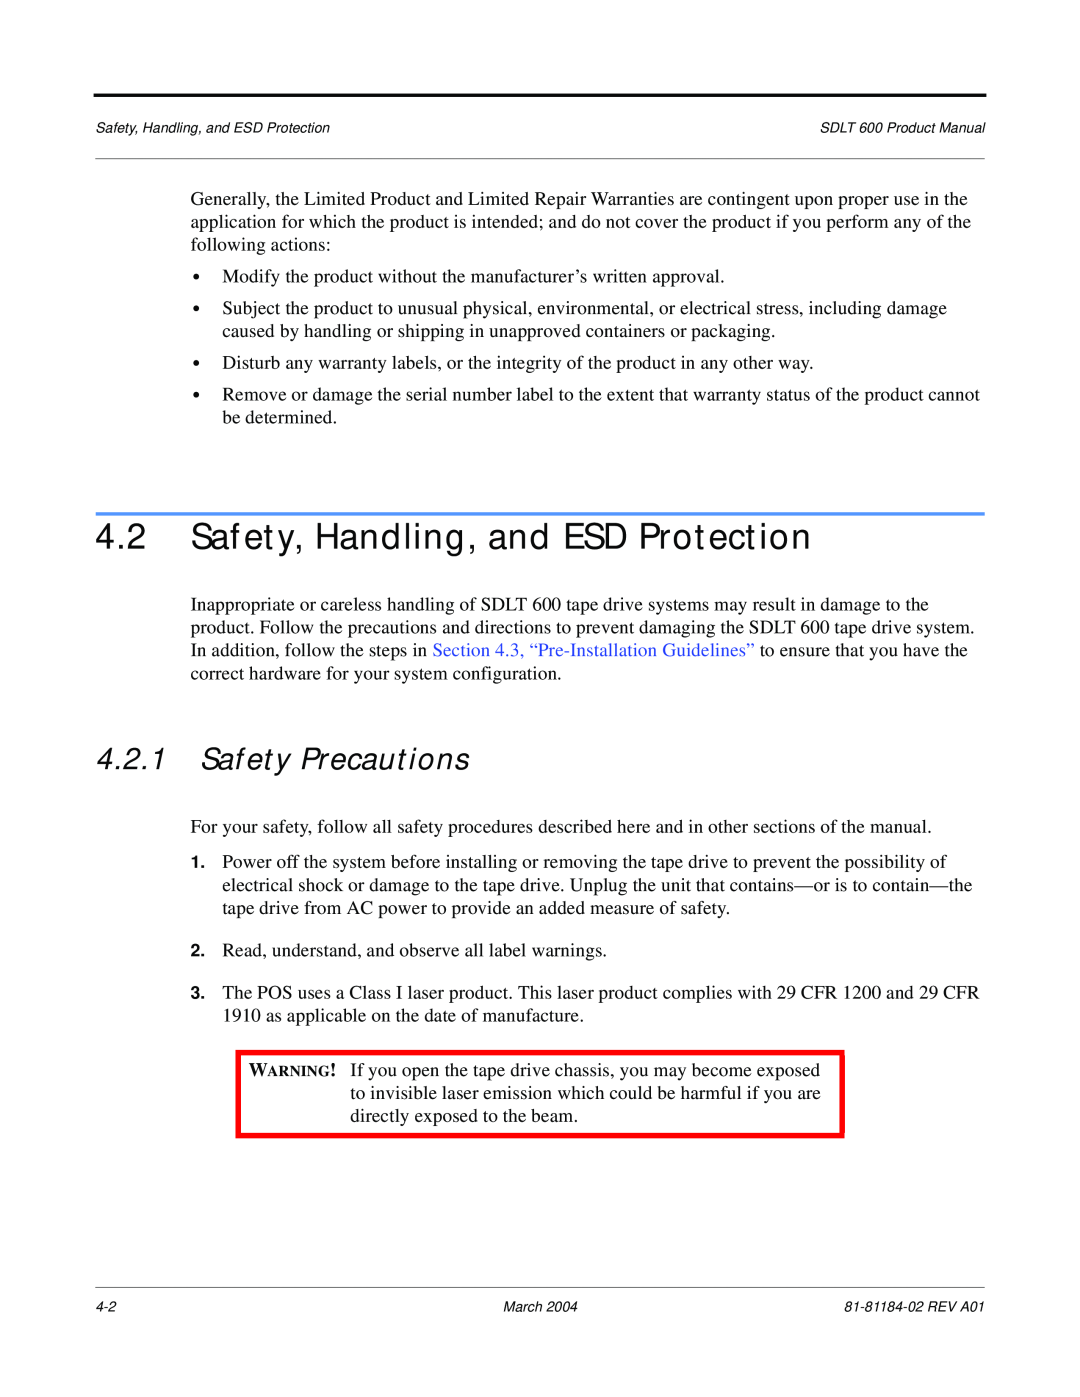 Tandberg Data 600 manual Safety, Handling, and ESD Protection, Safety Precautions 